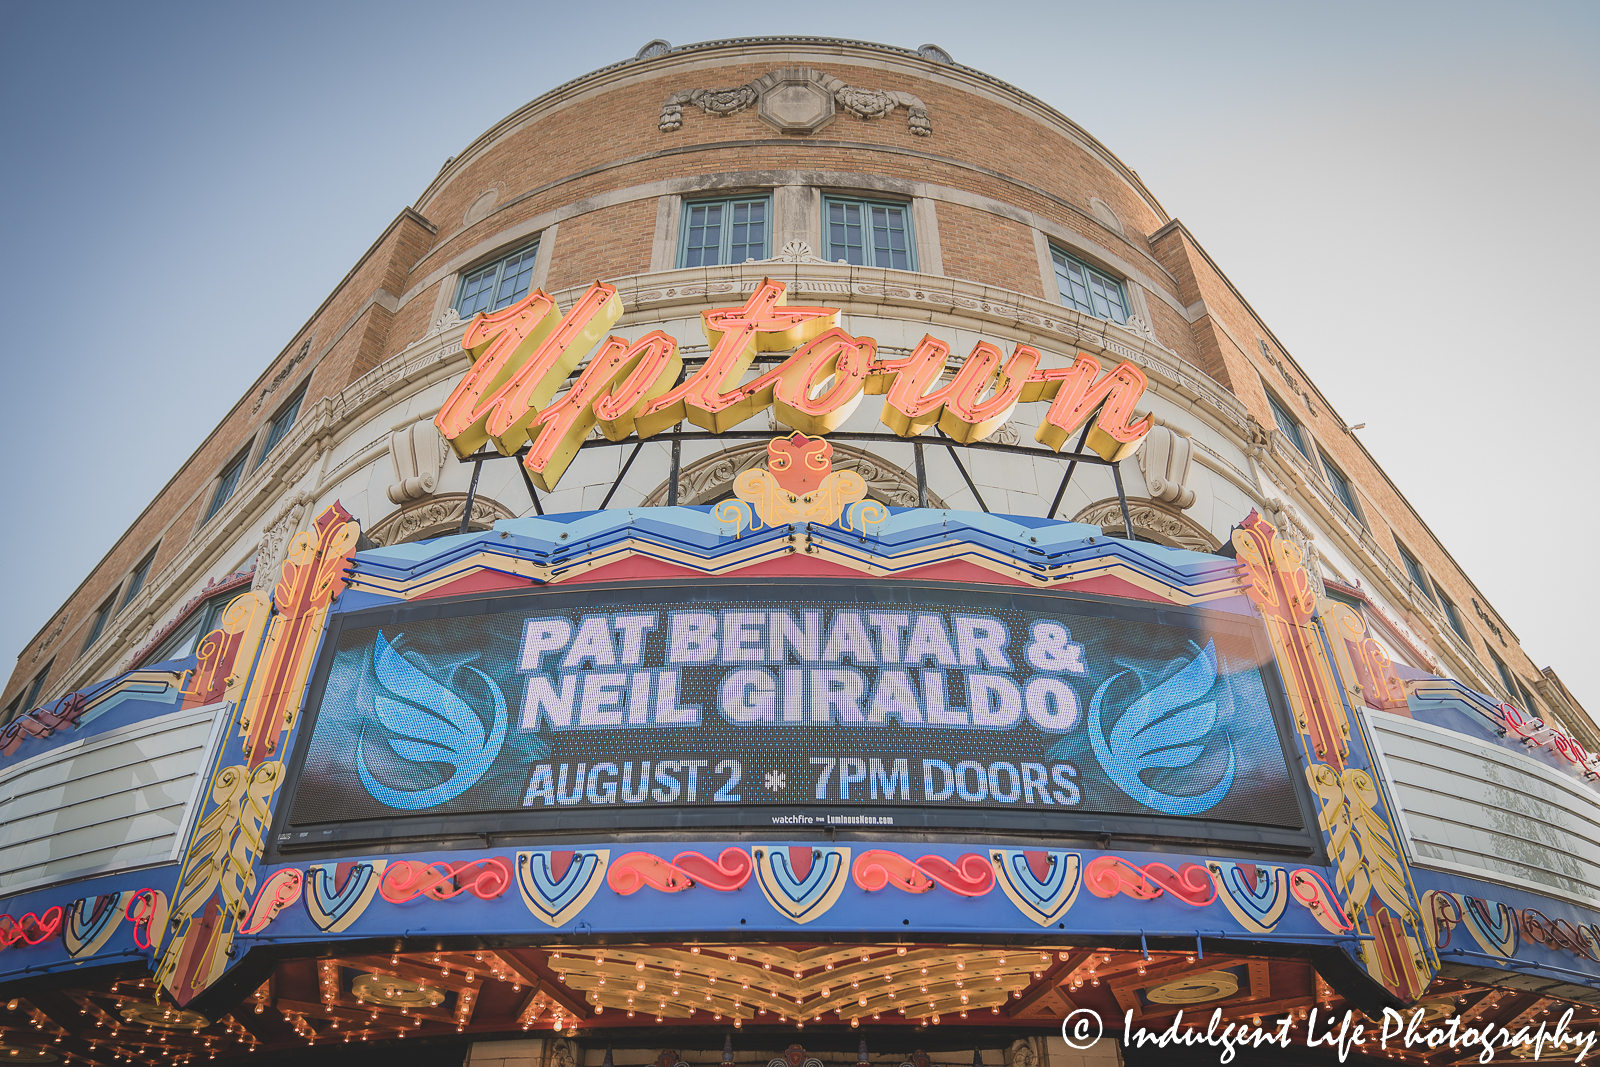 Uptown Theater in Kansas City, MO featuring Pat Benatar & Neil Giraldo live in concert on August 2, 2022.